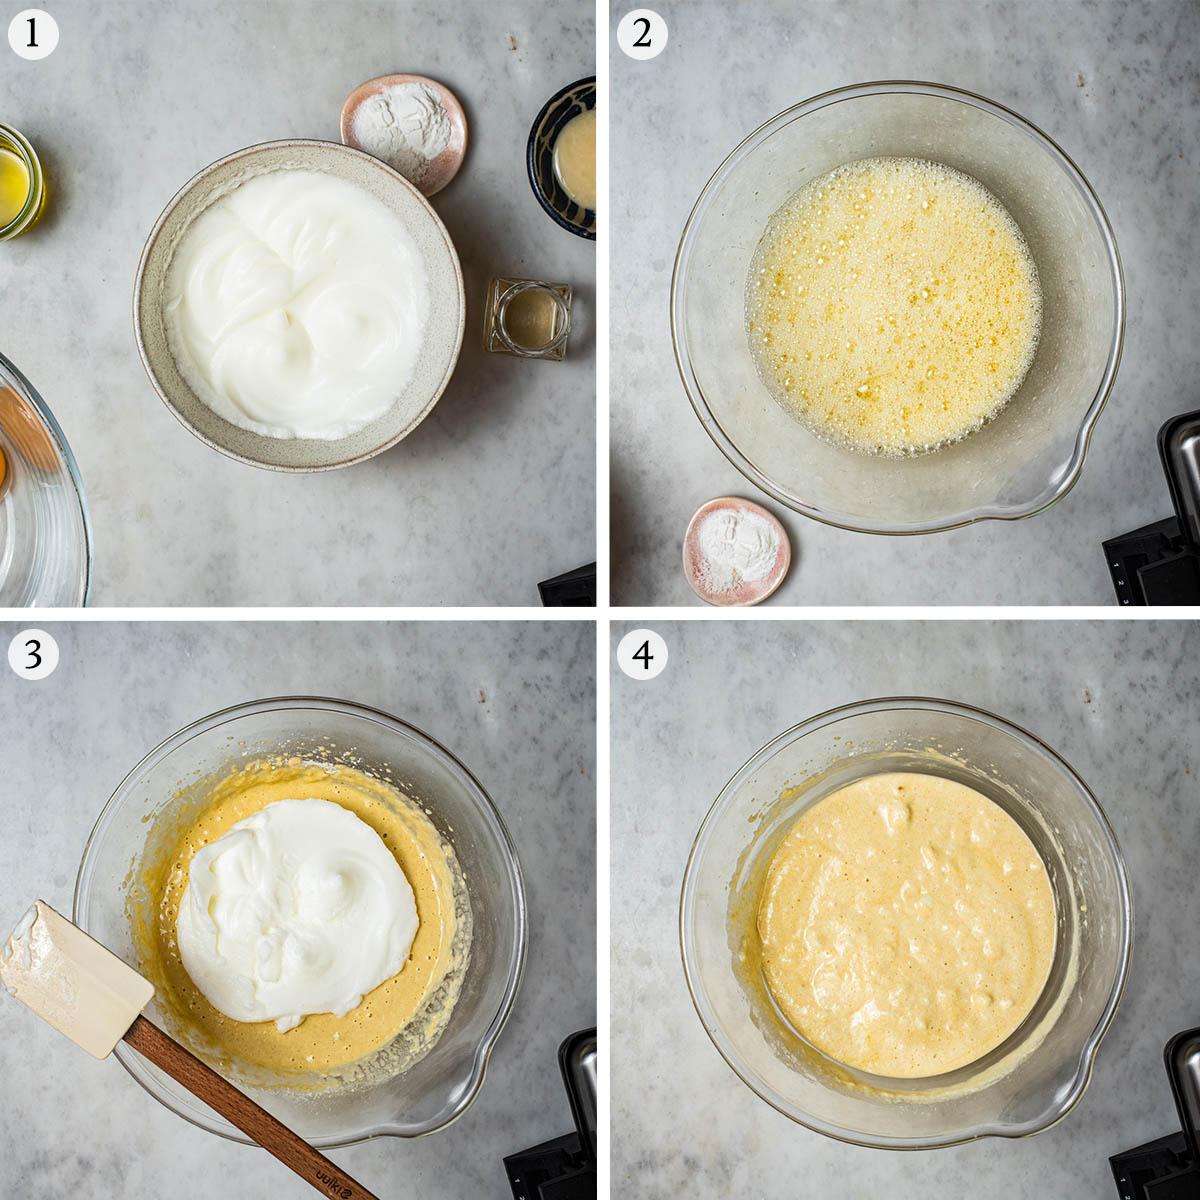 Waffle batter steps 1 to 4, beaten egg whites, batter mixture, and folding in egg whites.